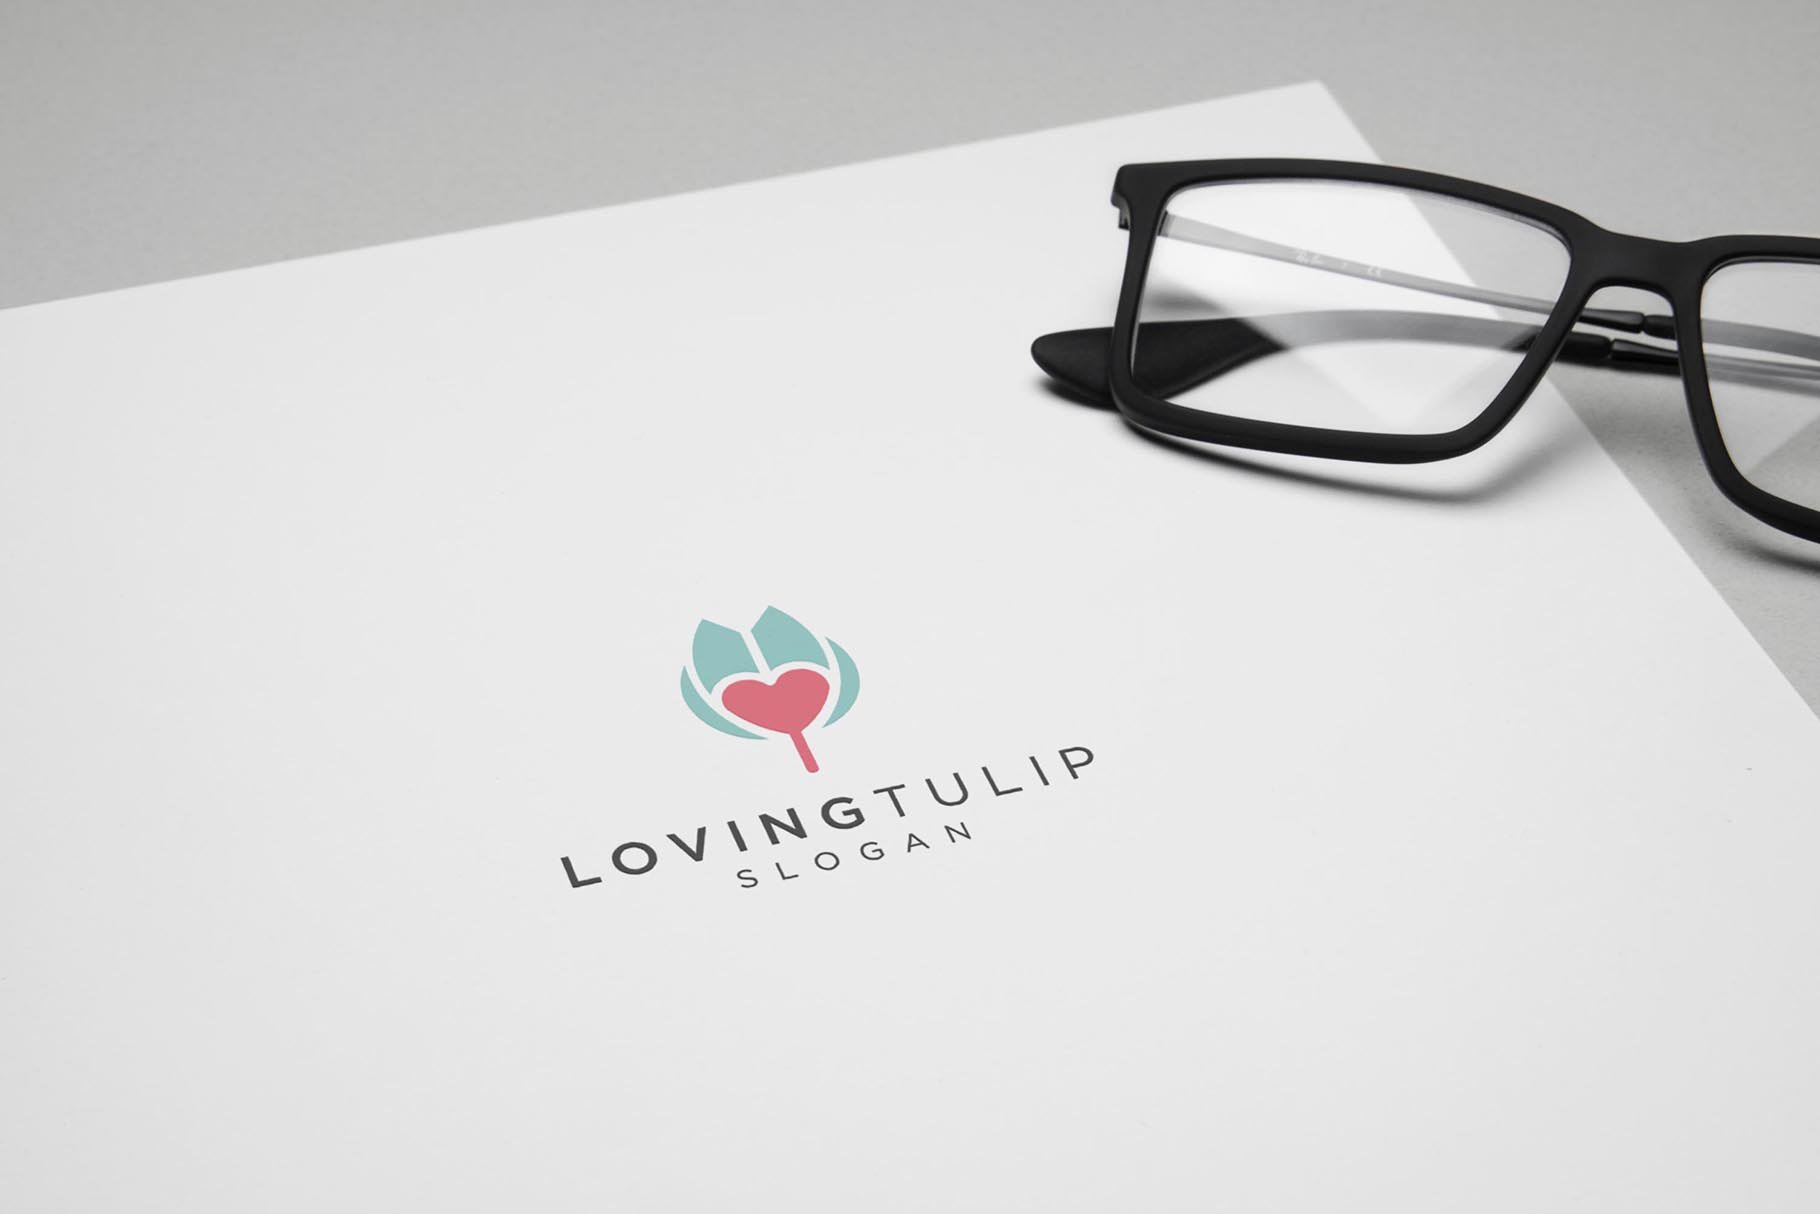 Loving Tulip Logo preview image.